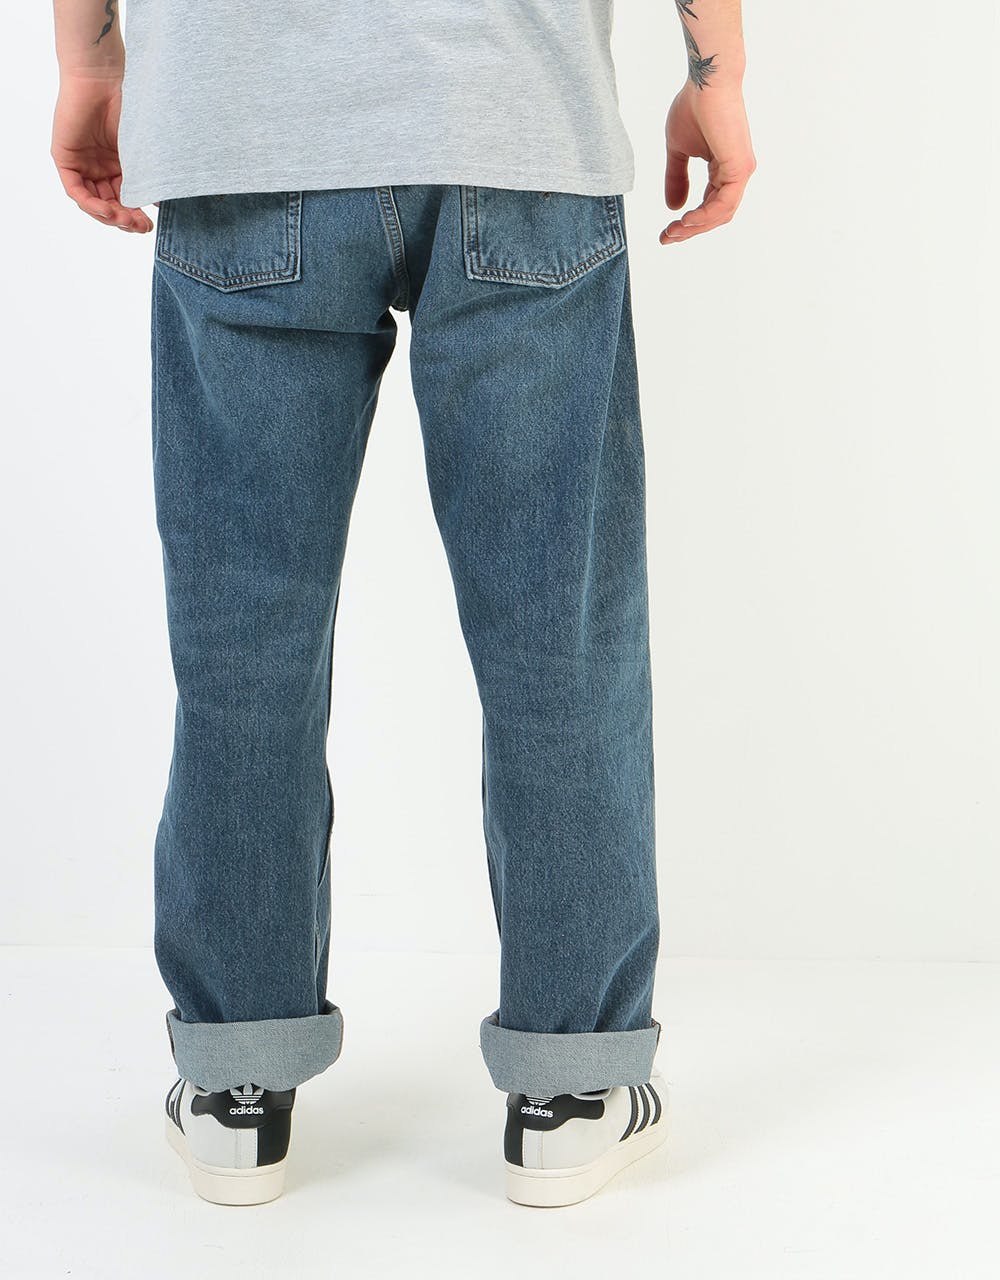 Levi's Skateboarding Baggy 5 Pocket Denim Jeans - S&E Bush